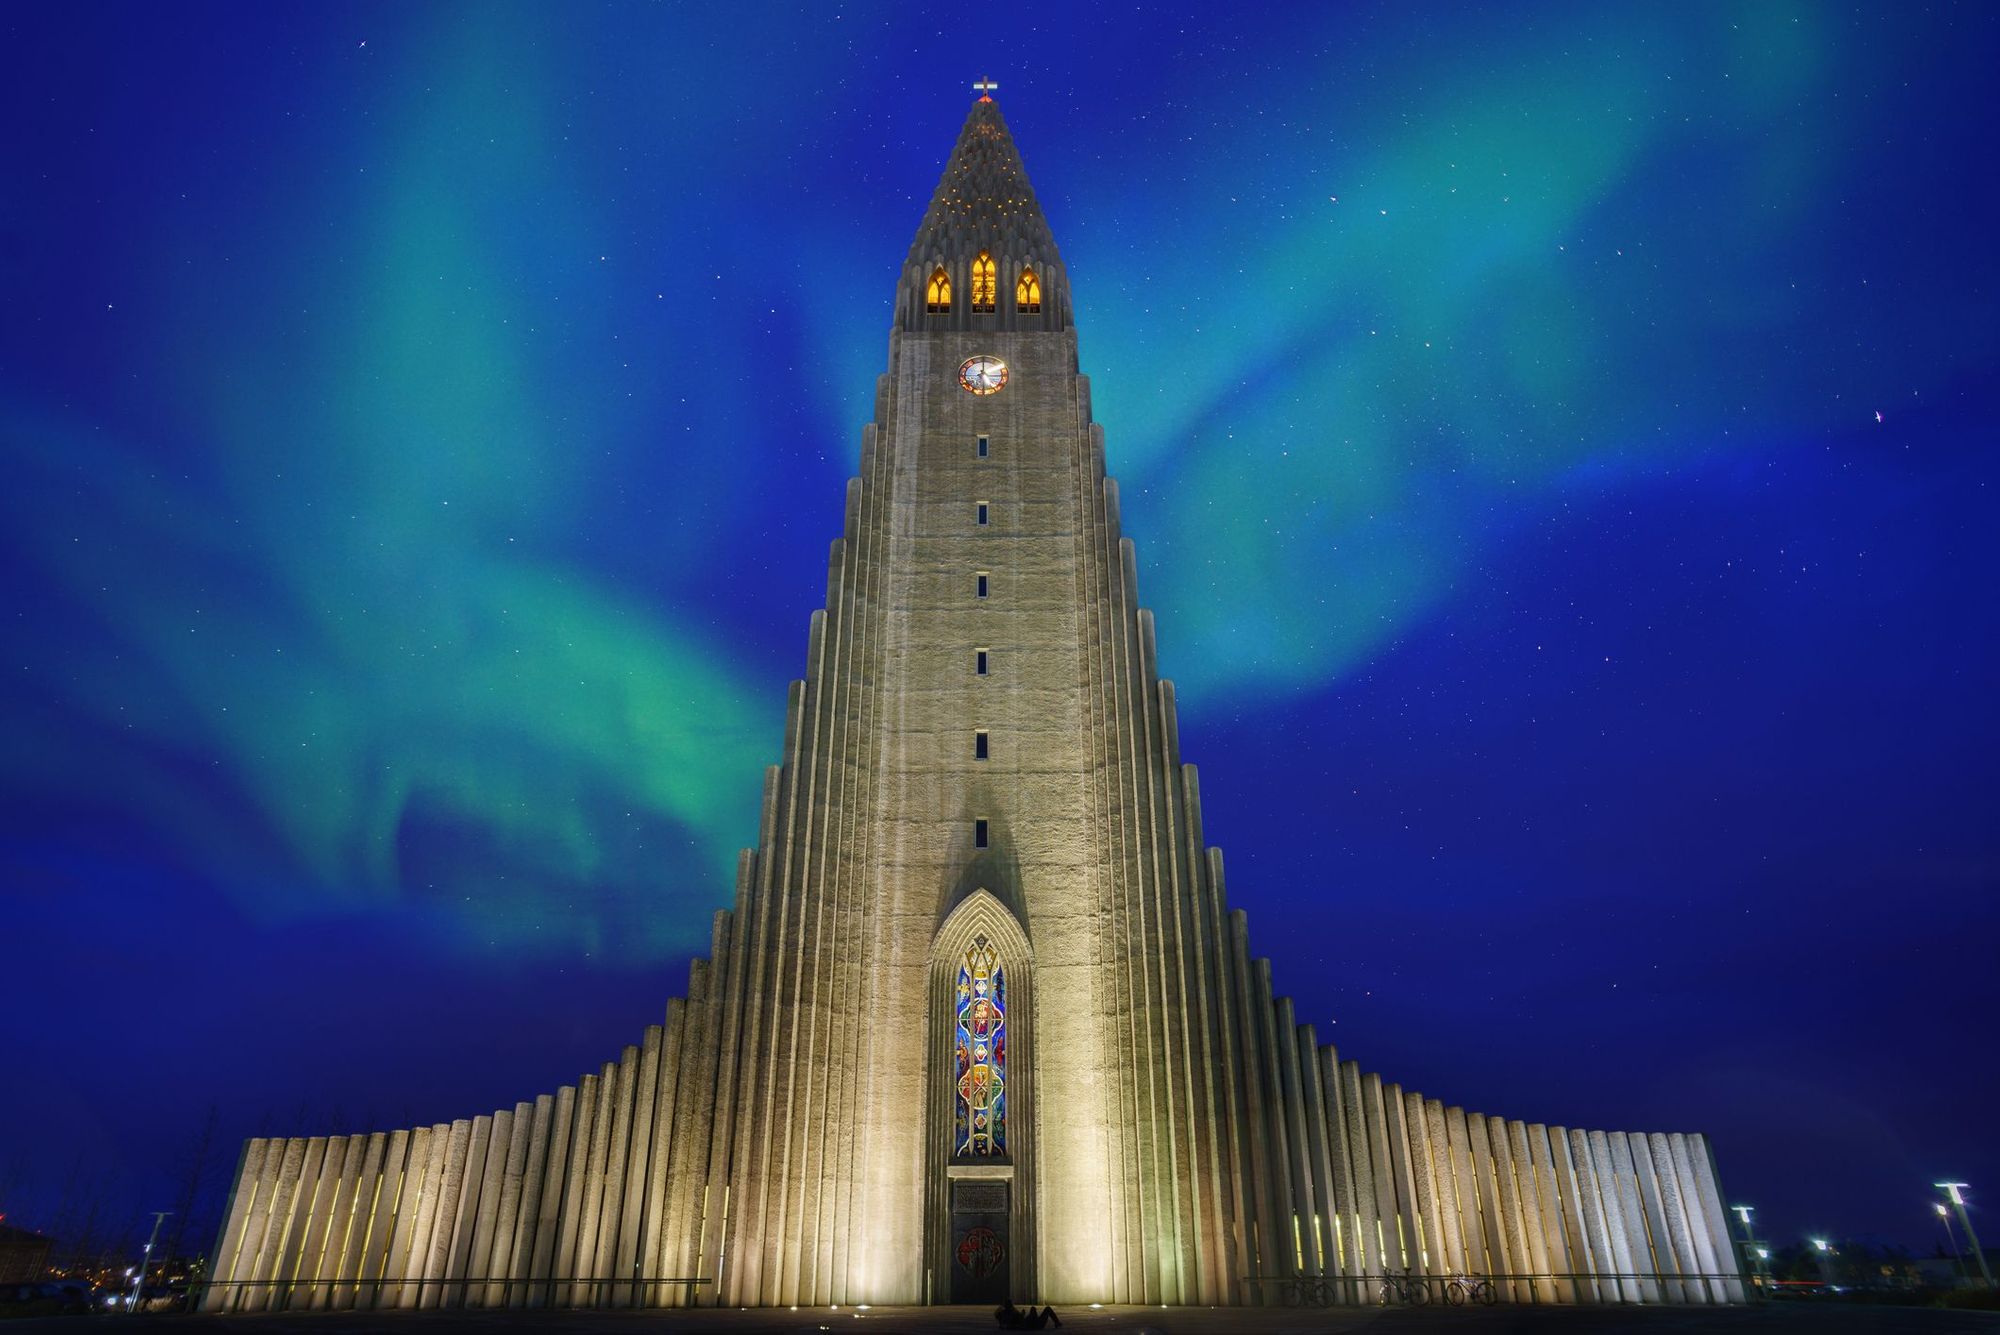 Hallgrimskirkja Church, Reykjavik, with the northern lights in the sky above.